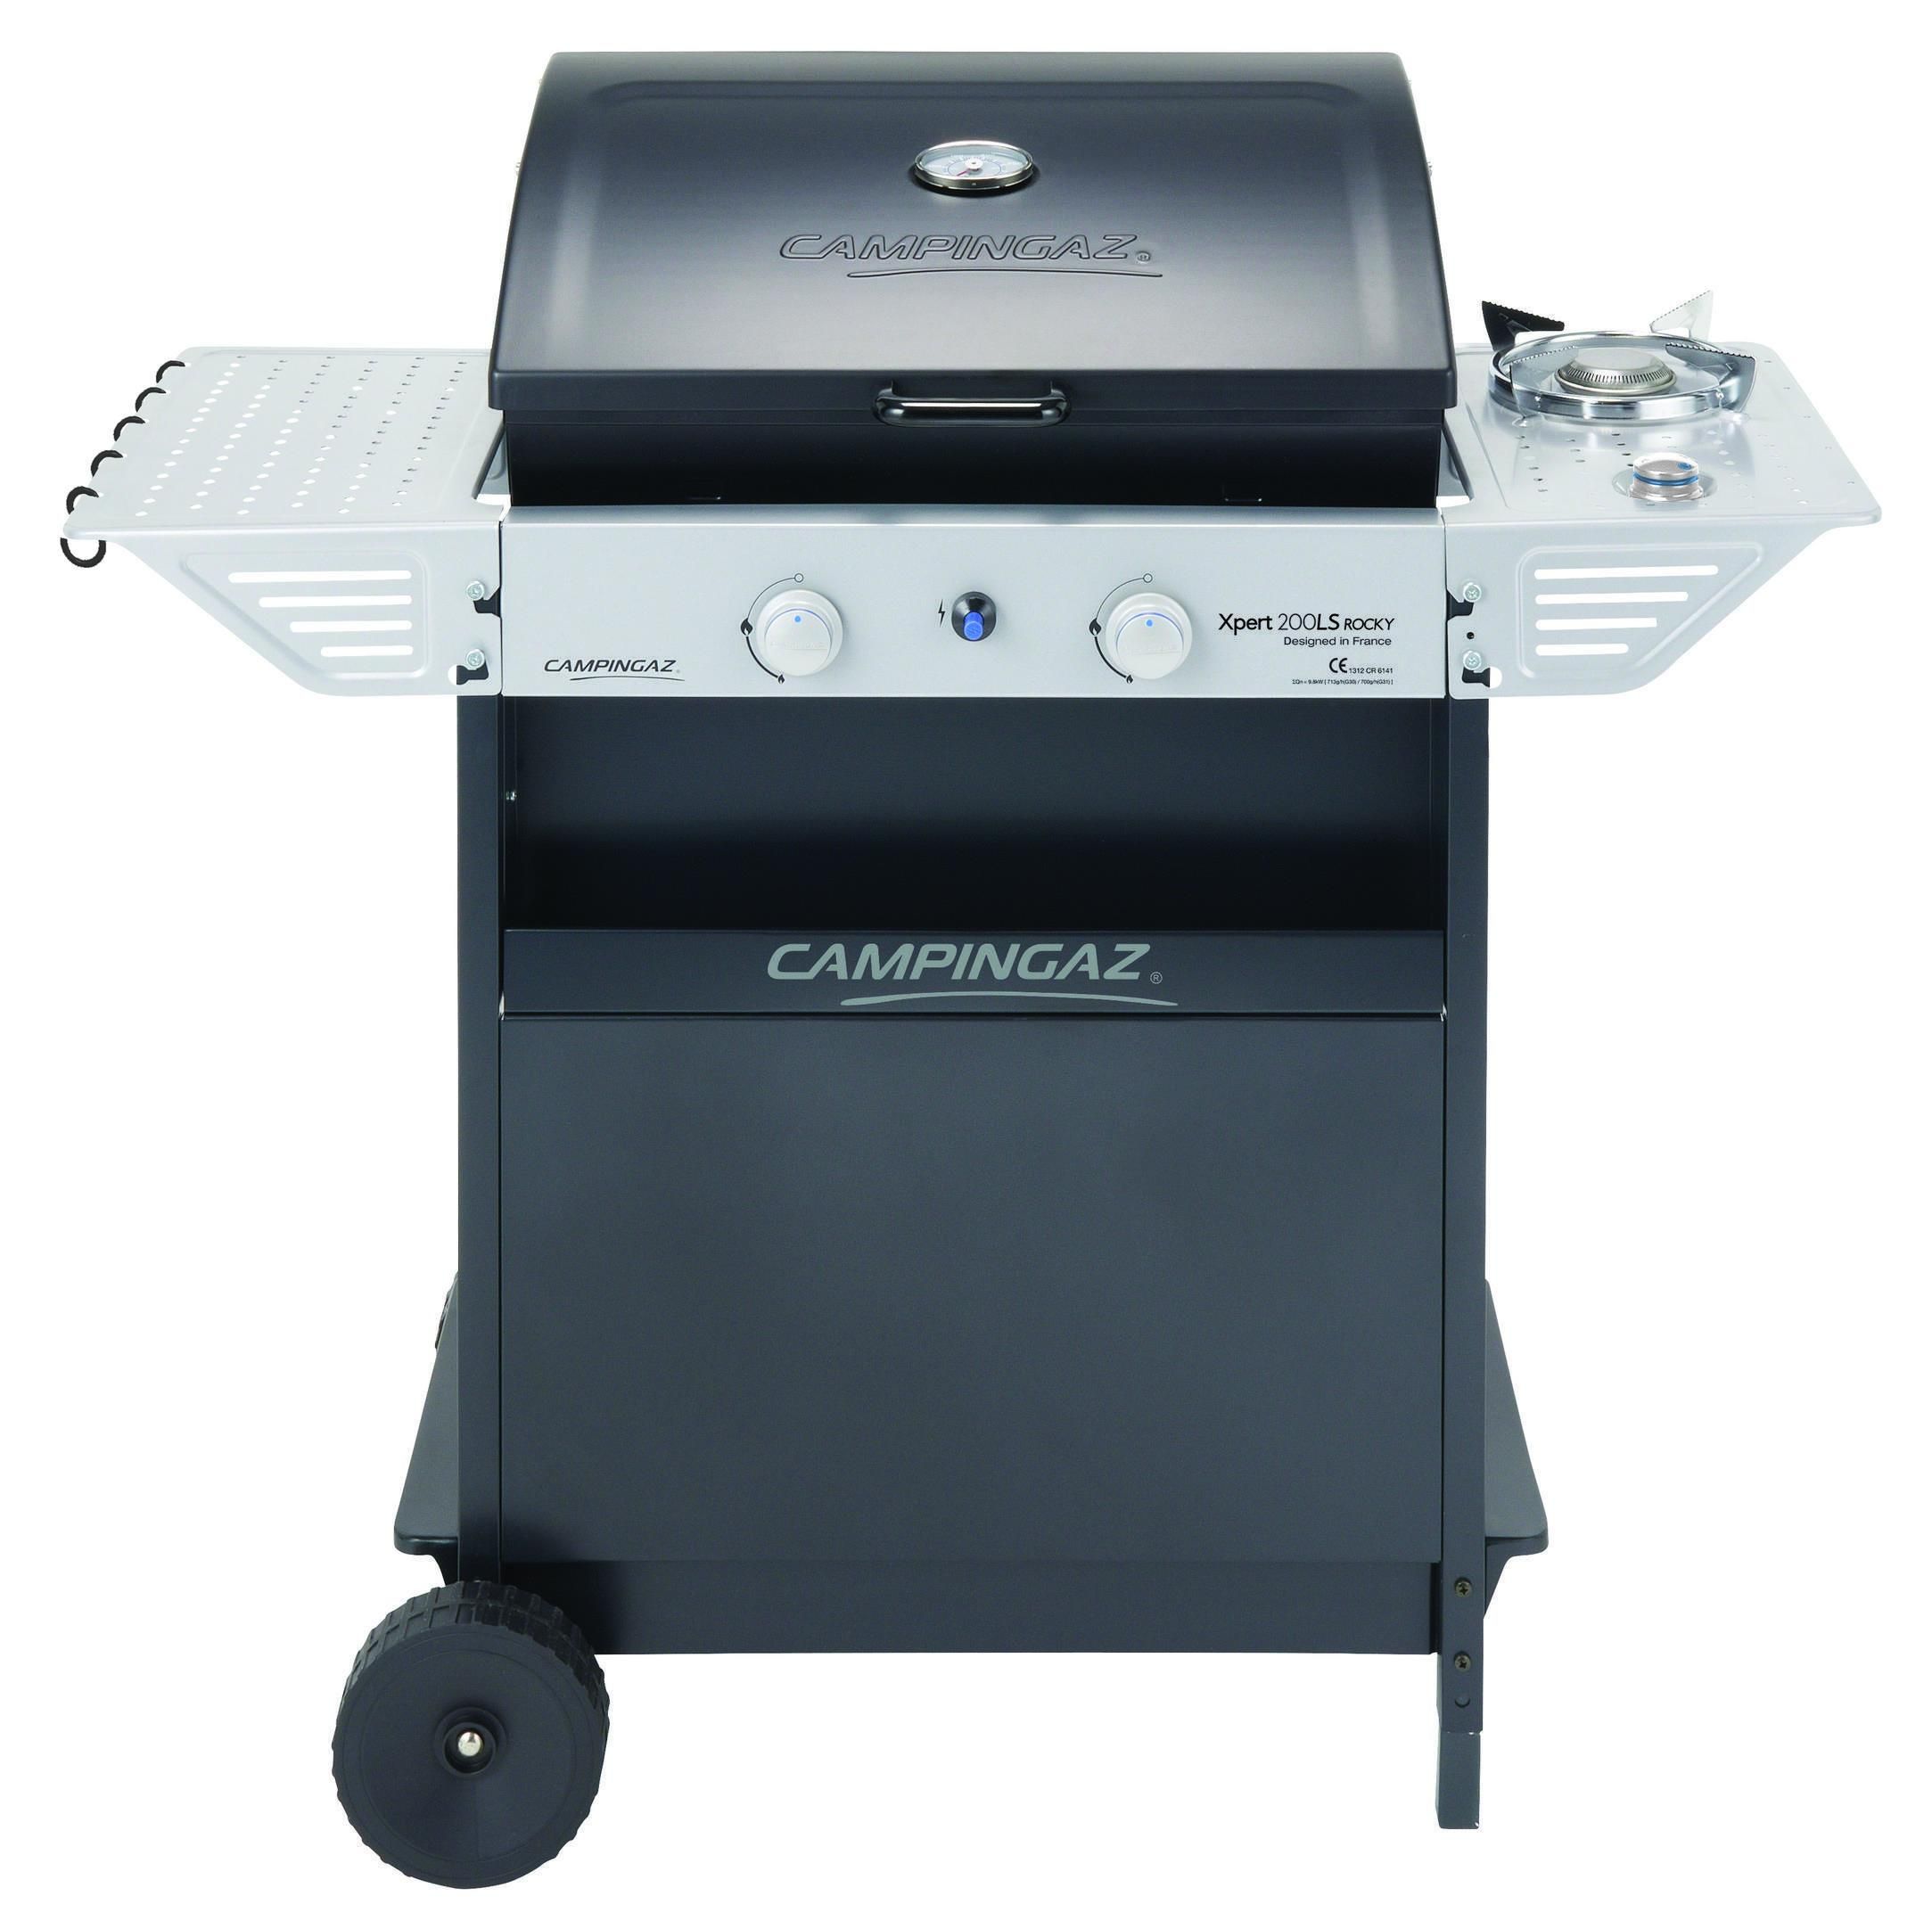 Campingaz Barbecue Xpert 200